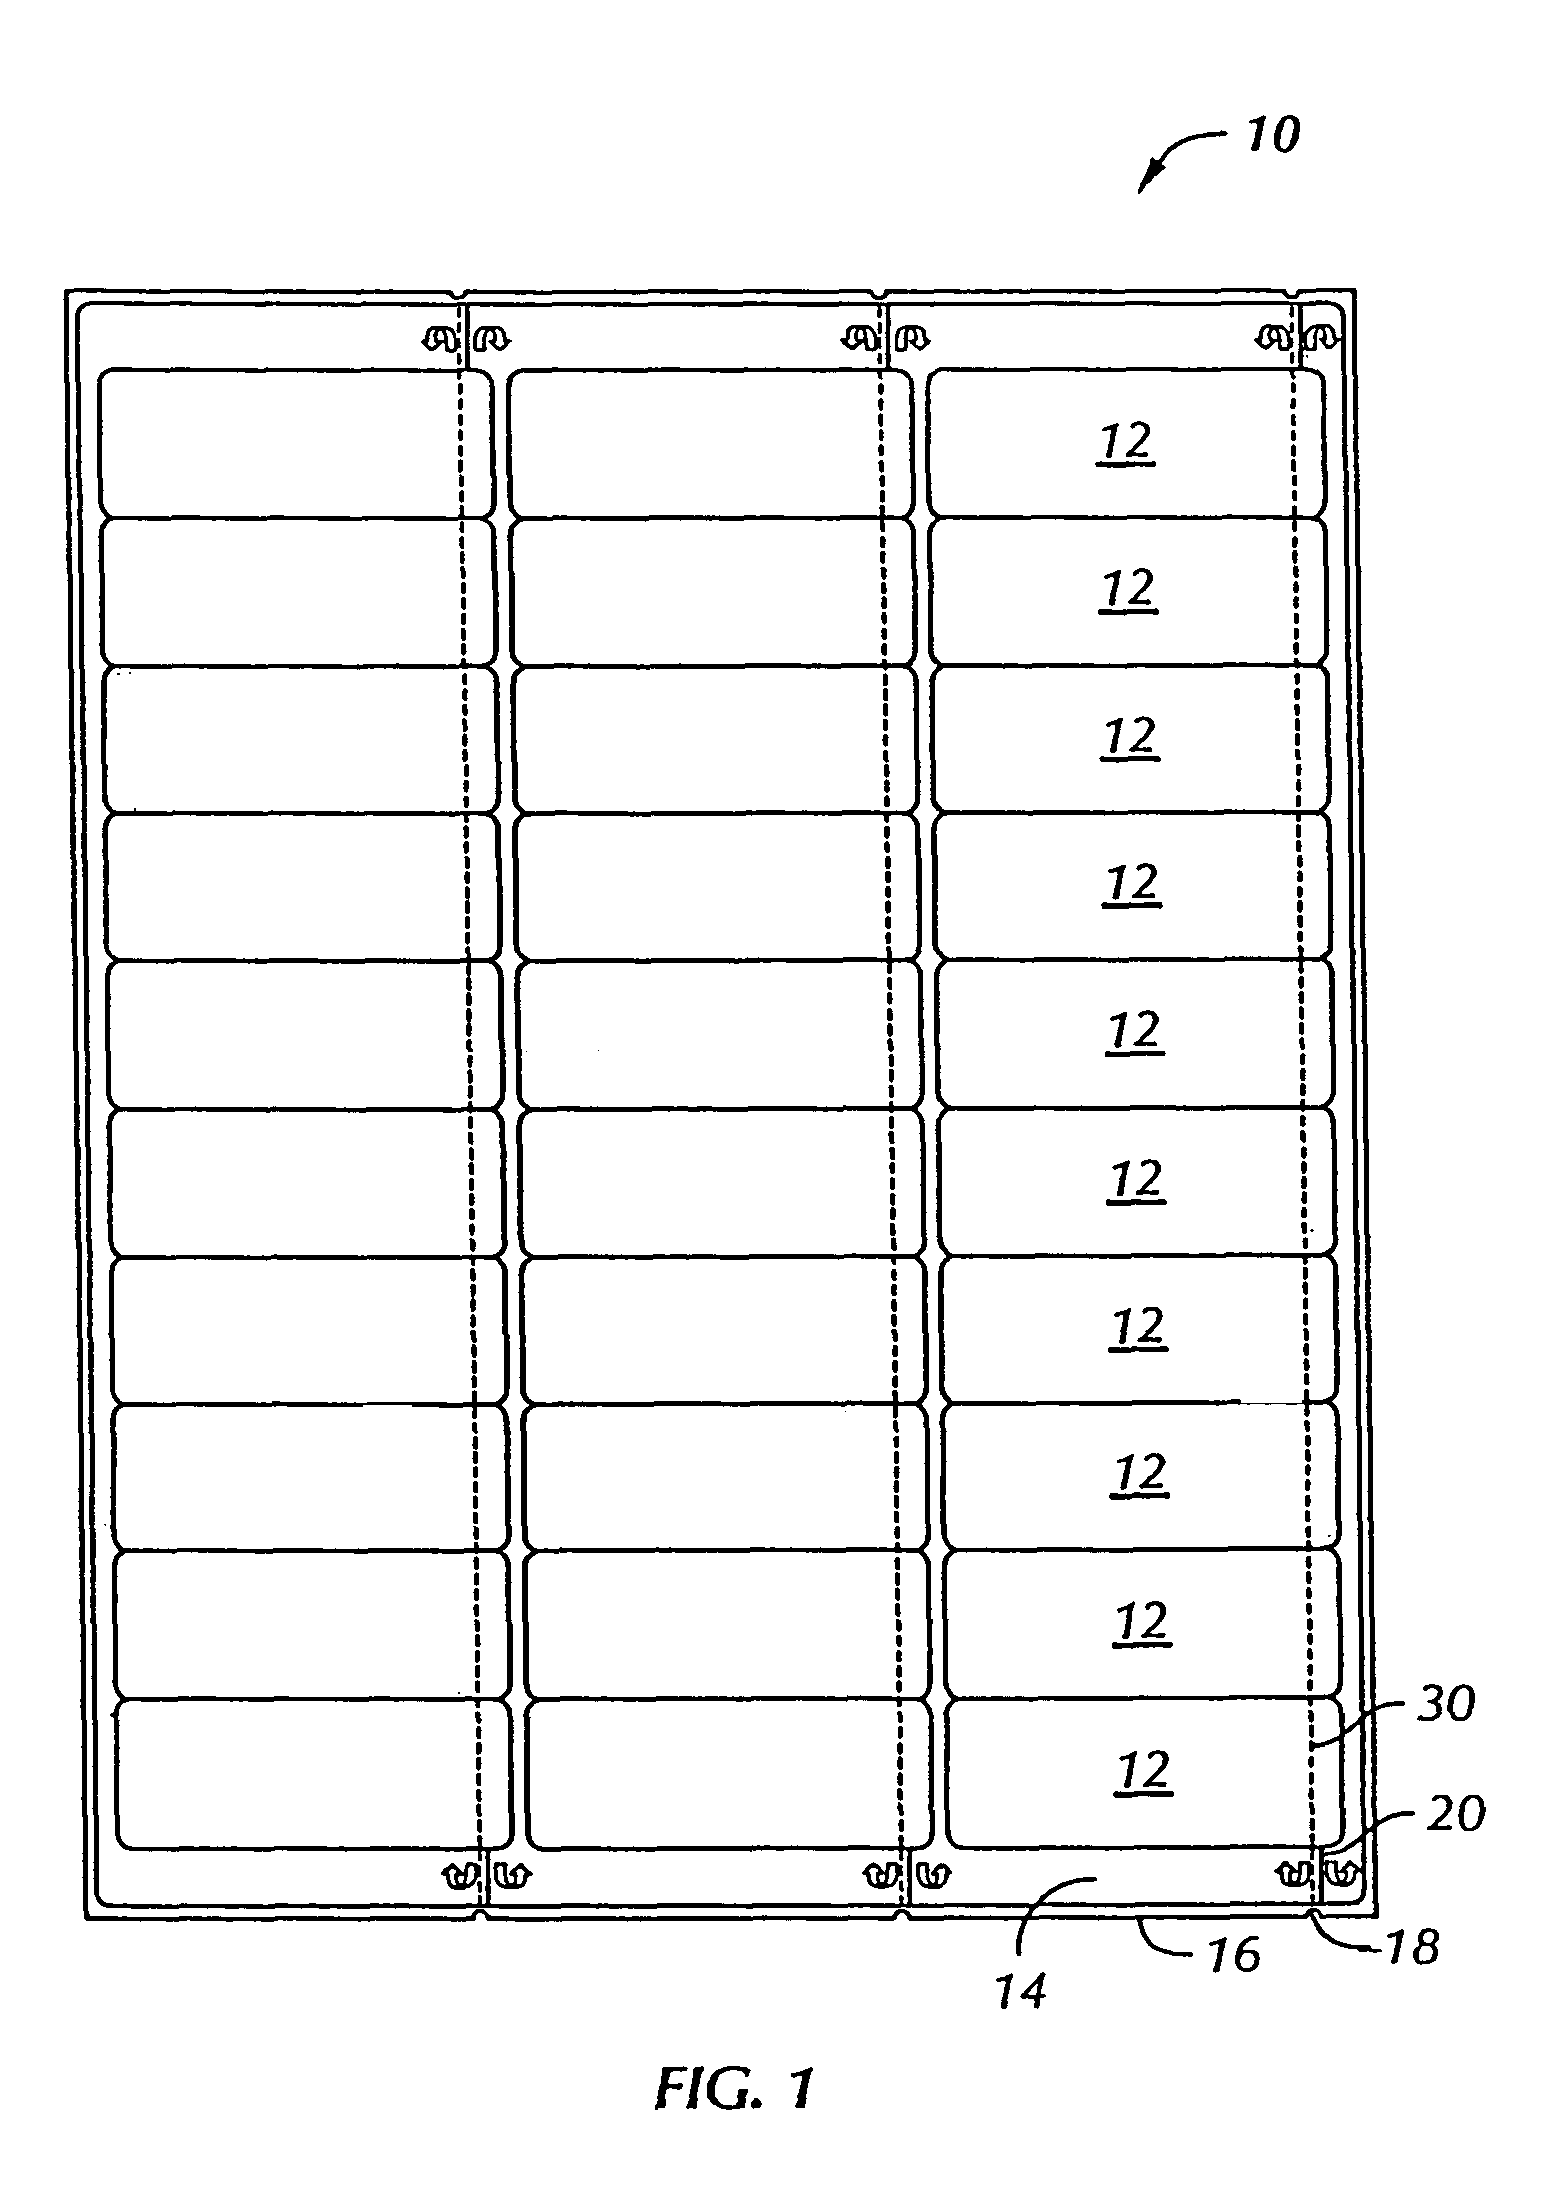 Label sheet design for easy removal of labels